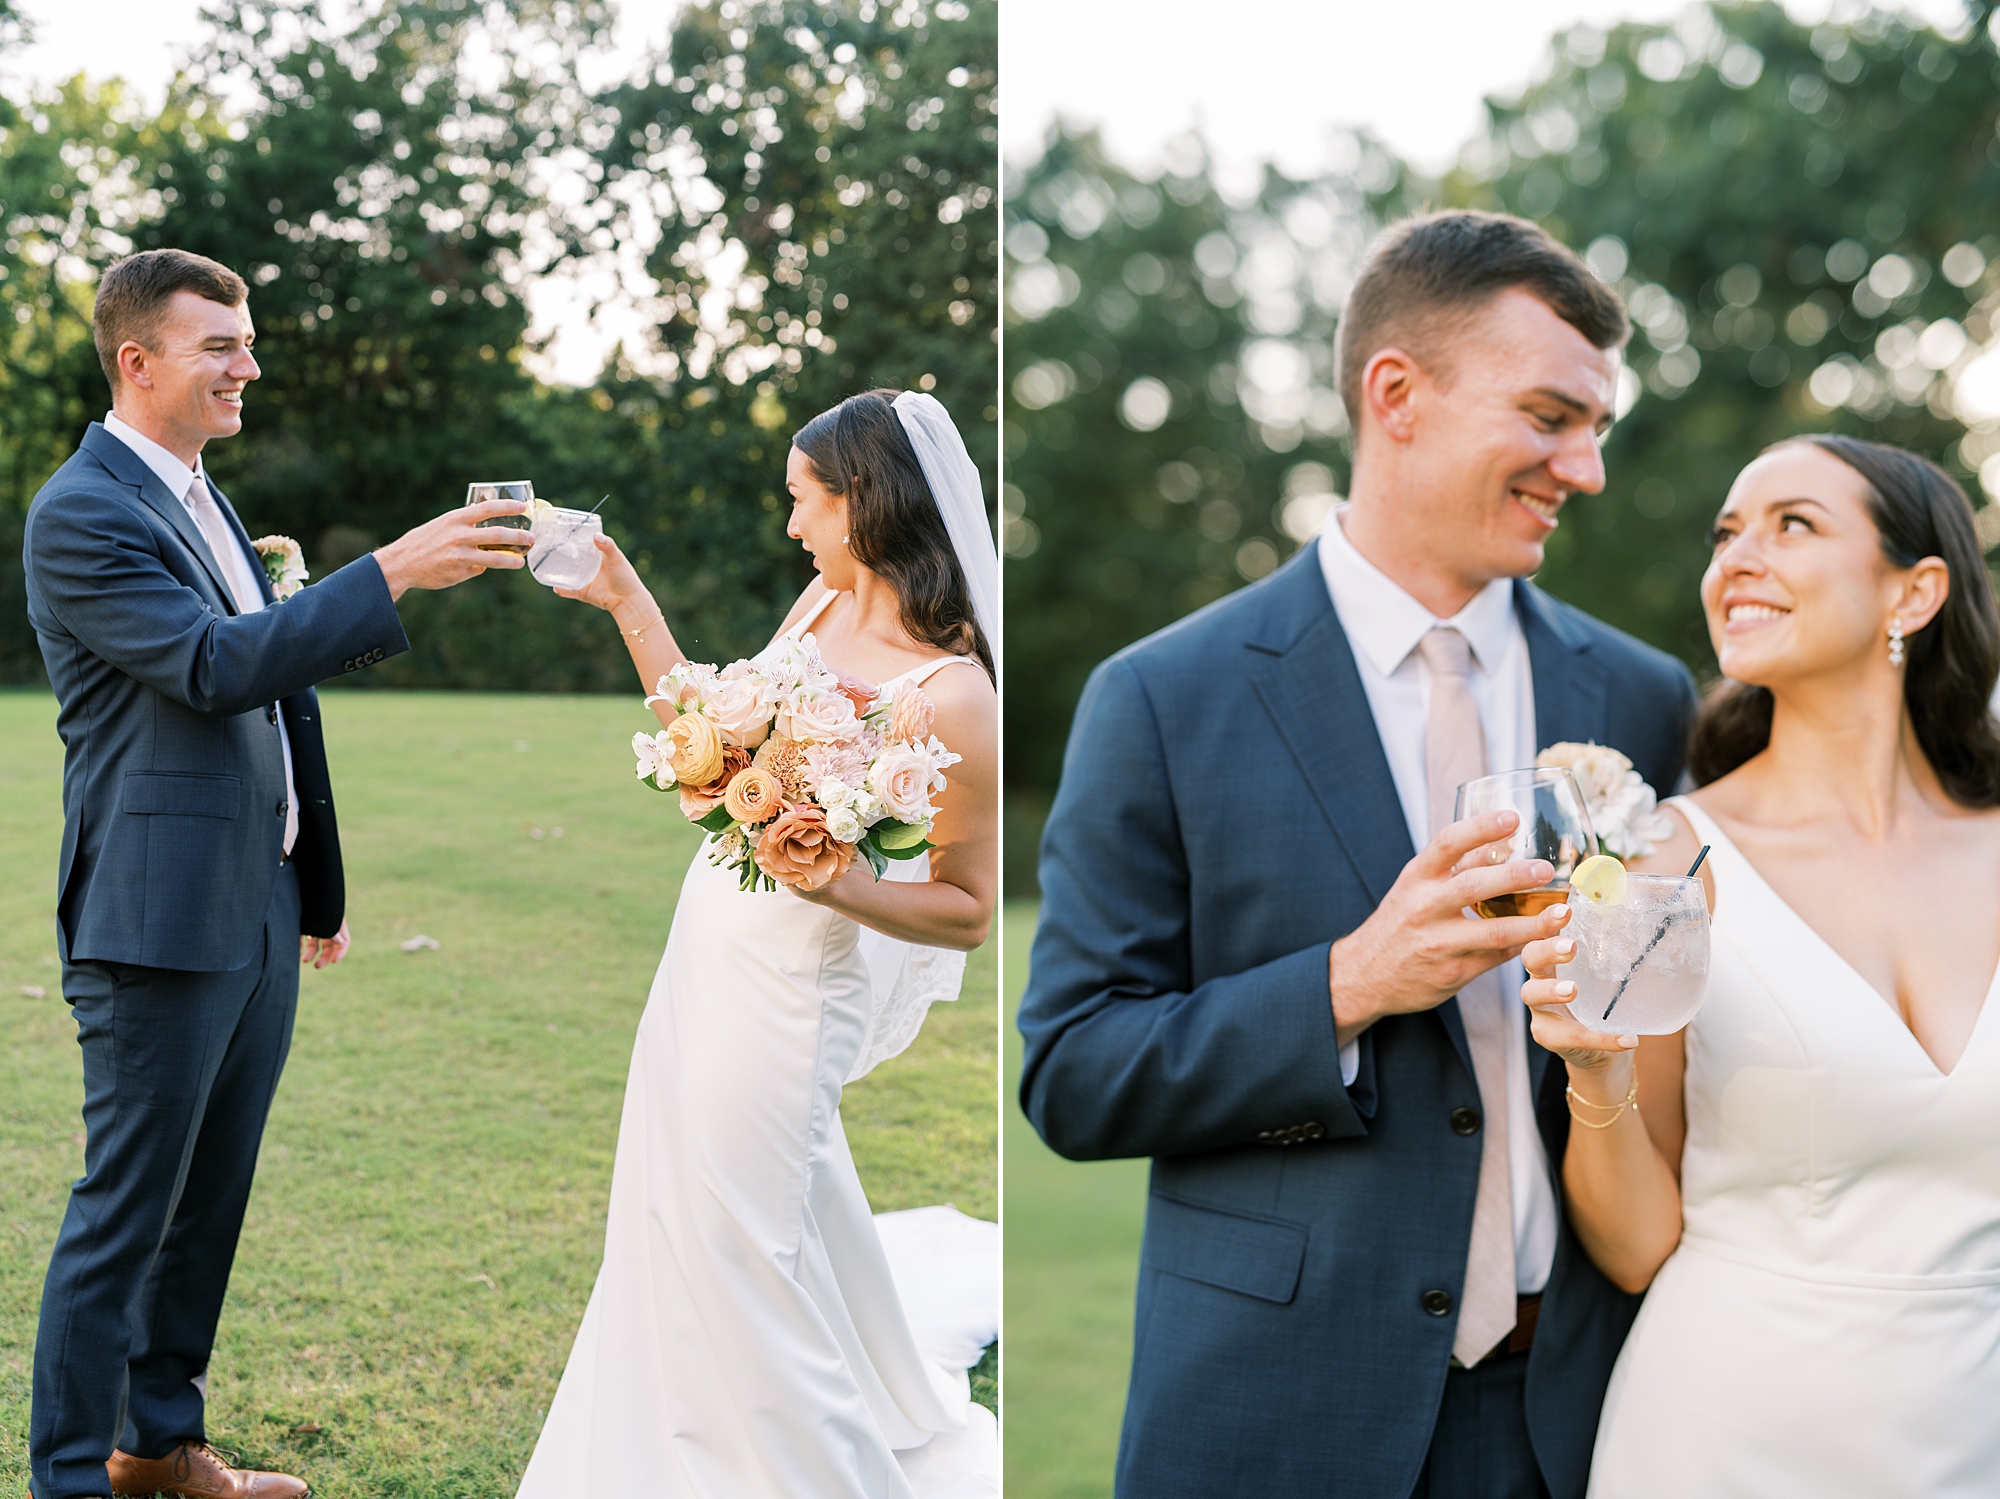 newlyweds share a toast after wedding ceremony